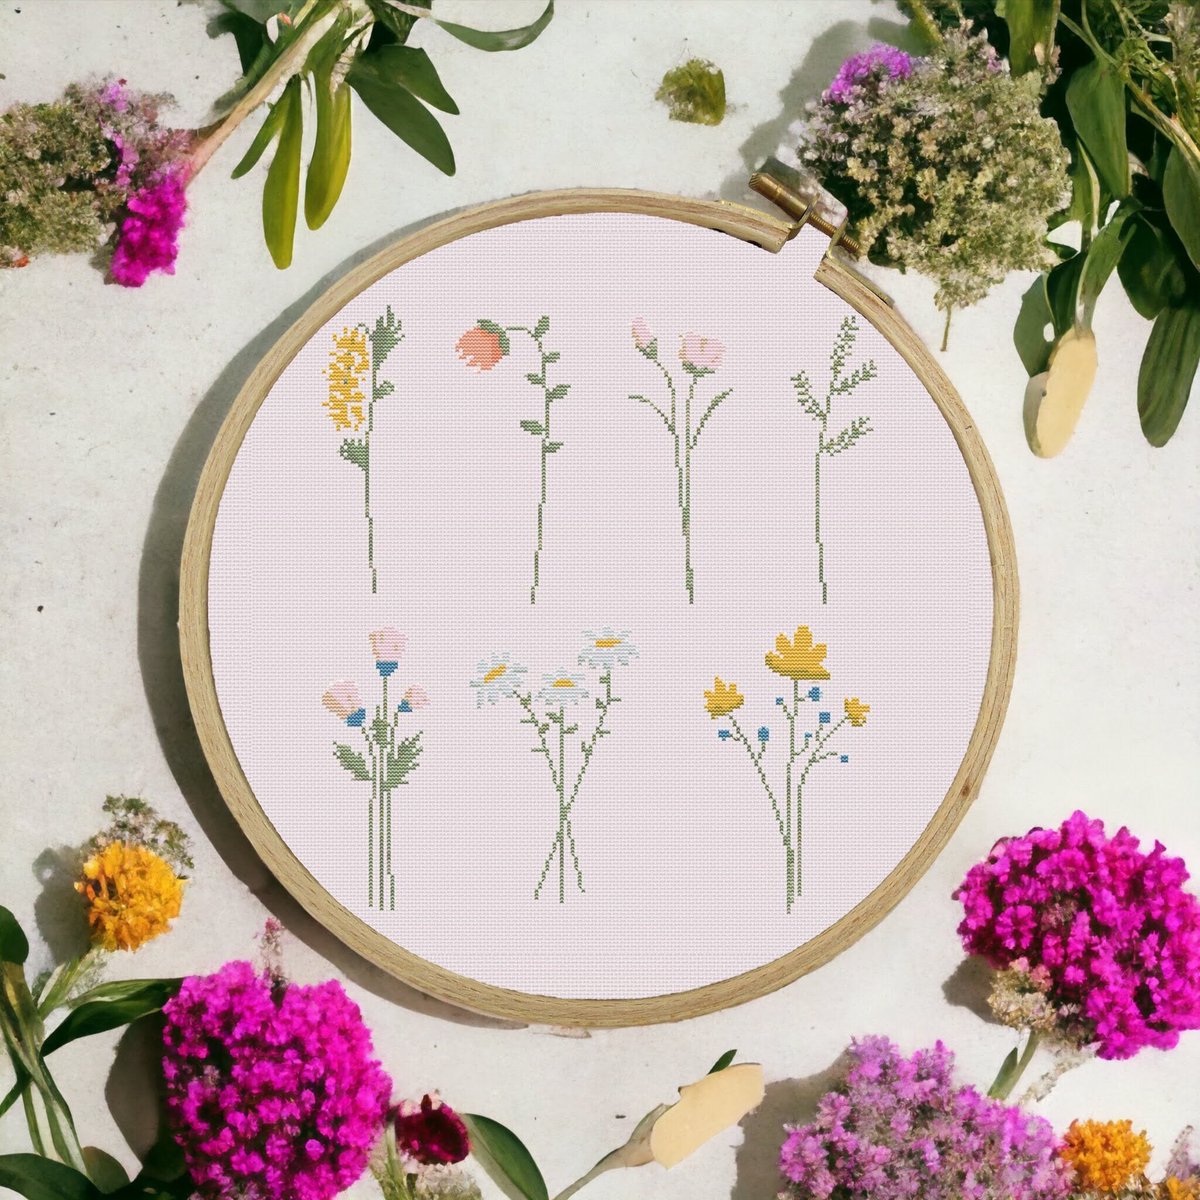 my #etsy shop: 7 Flower Pixel Art Mini Cross Stitch Patterns PDF ONLY - Embroidery Pattern - 200x200 Stitch, Floral, Cottagecore, Nature, Spring, Summer etsy.me/3WGKXNv #housewarming #easter #crossstitch #crossstitchpattern #pdfpattern #embroiderypattern #cross